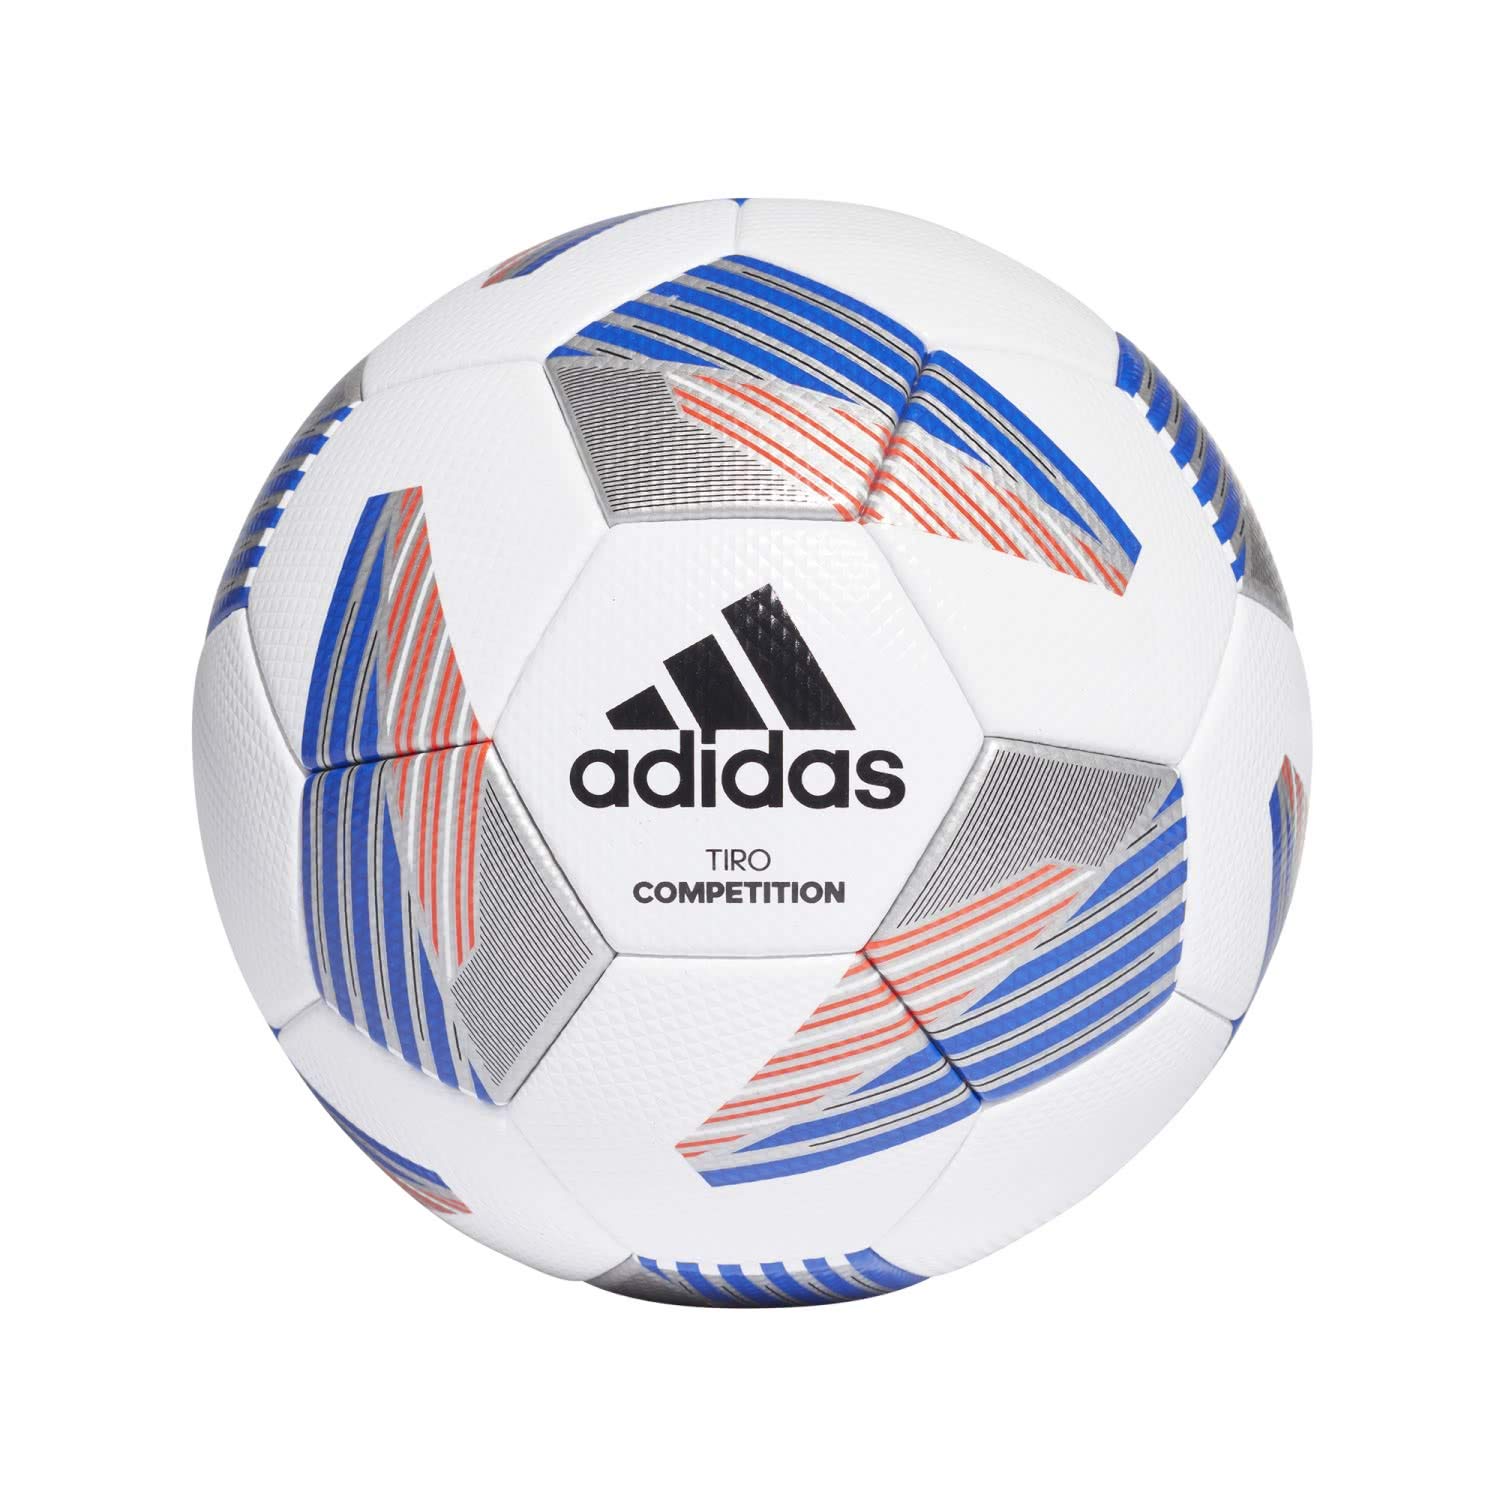 adidas FS0392 Unisex – Erwachsene Tiro Com Fußball Ball, White/Black/ROYBLU/SI, 4